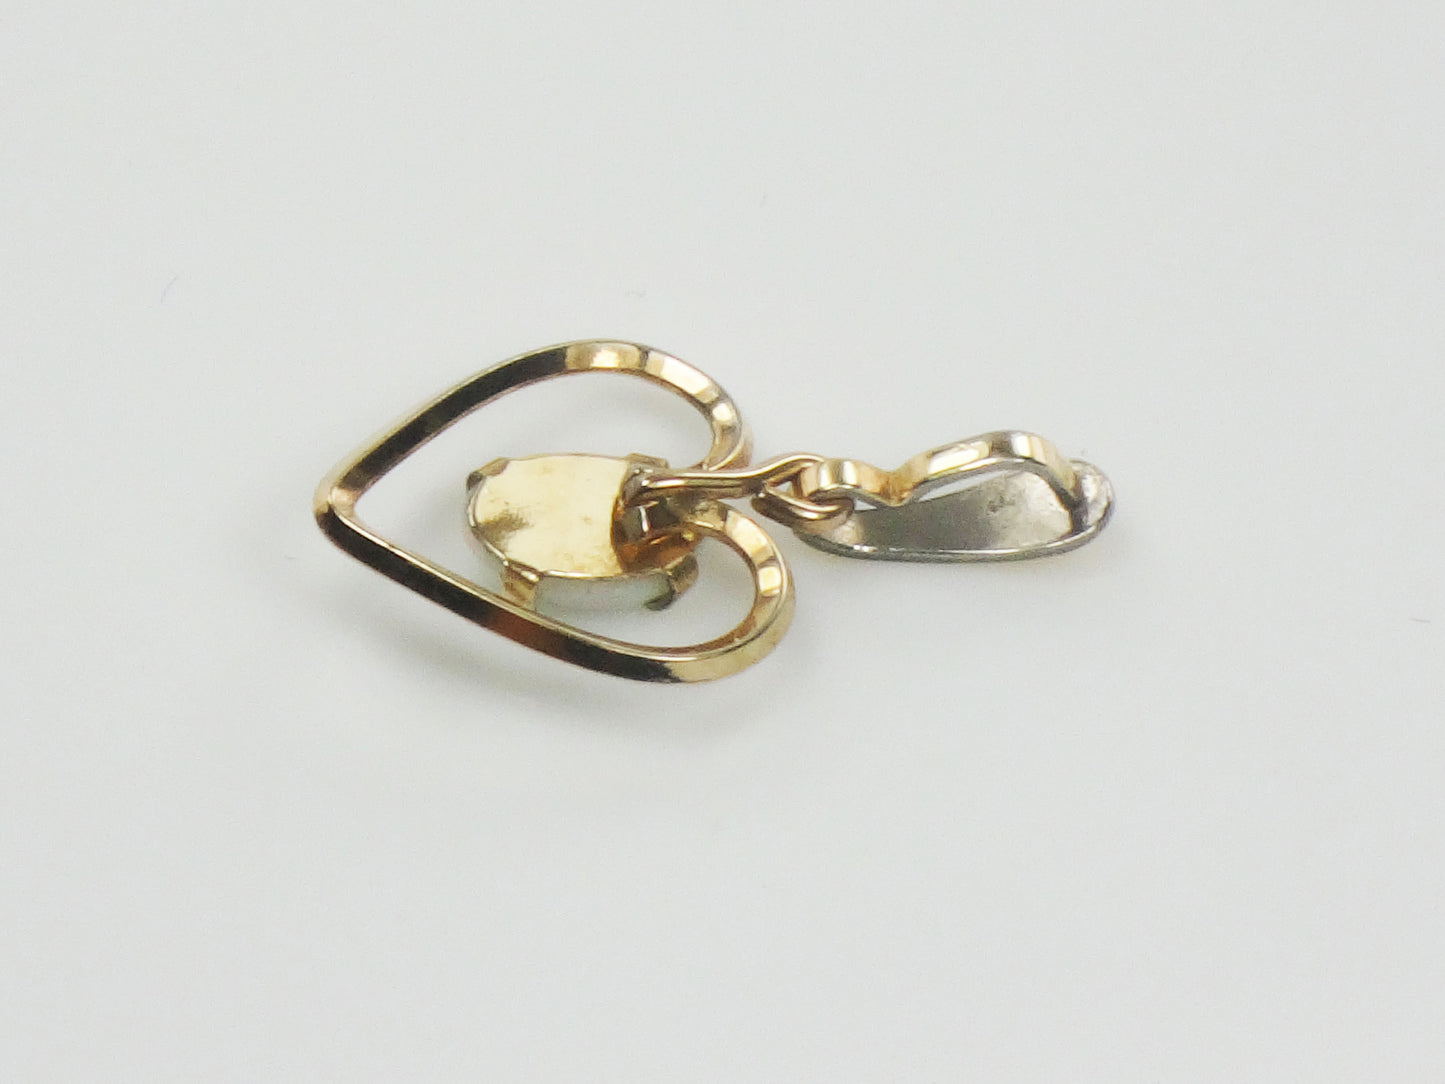 Vintage Gold Tone Natural Opal Heart Pendant - October Birthstone